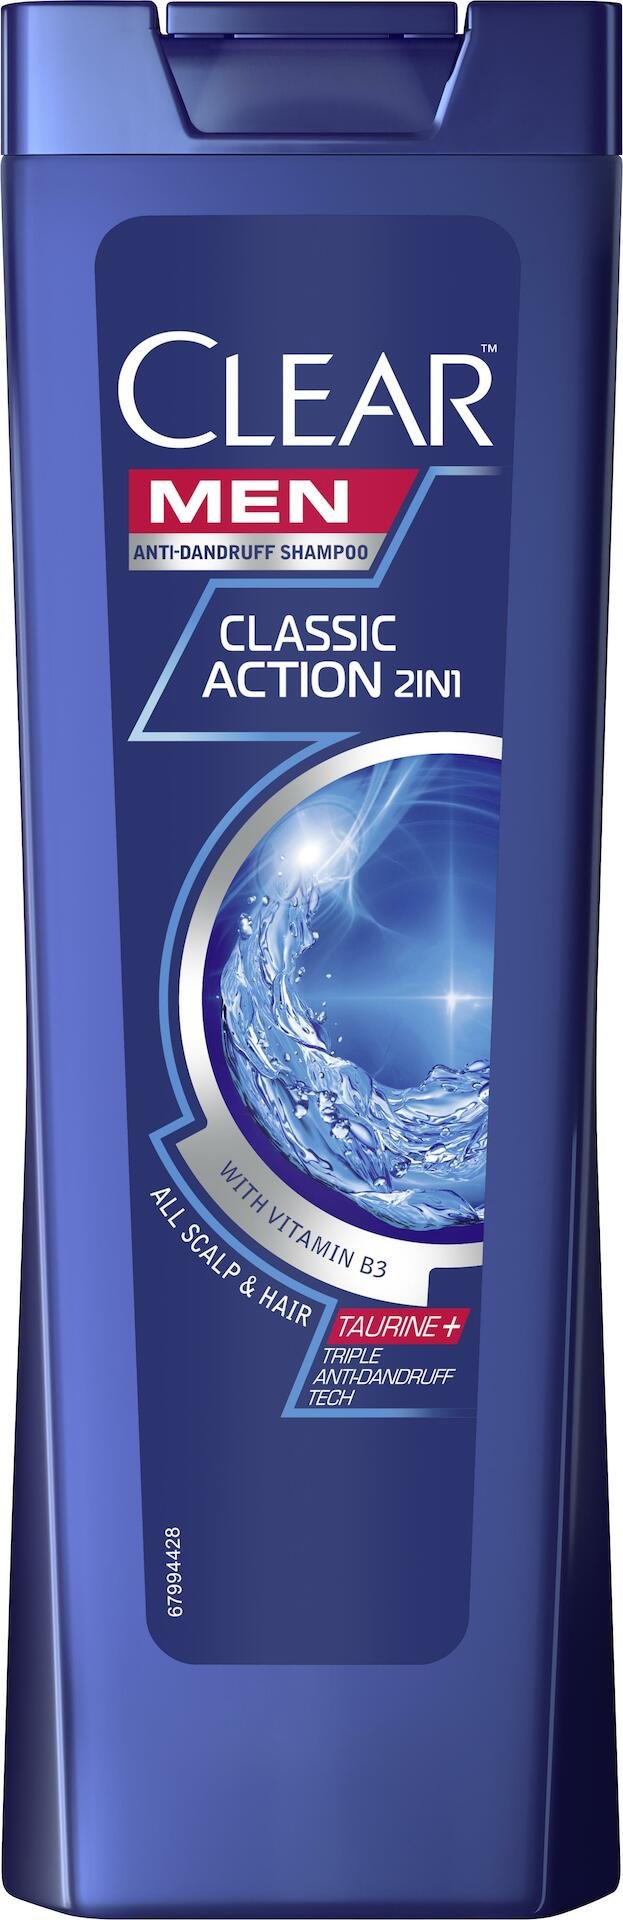 CLEAR Men Classic Action Anti-dandruff Shampoo 250 ml